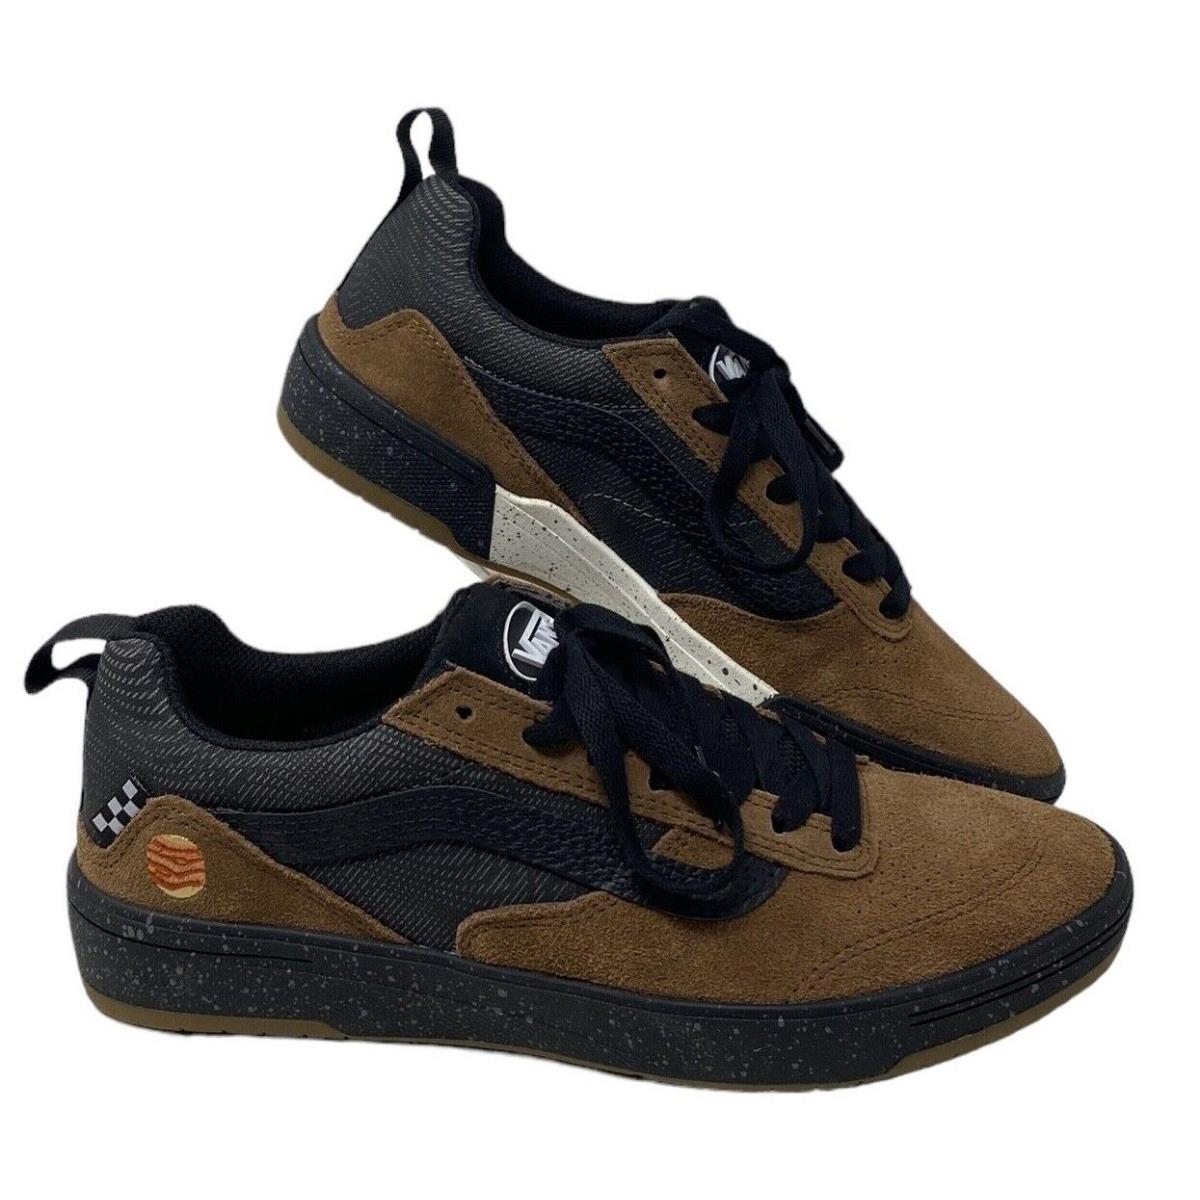 Vans Zahba Shoe For Women Skate Sneakers Low Top Suede Brown Casual VN0007QQBF0